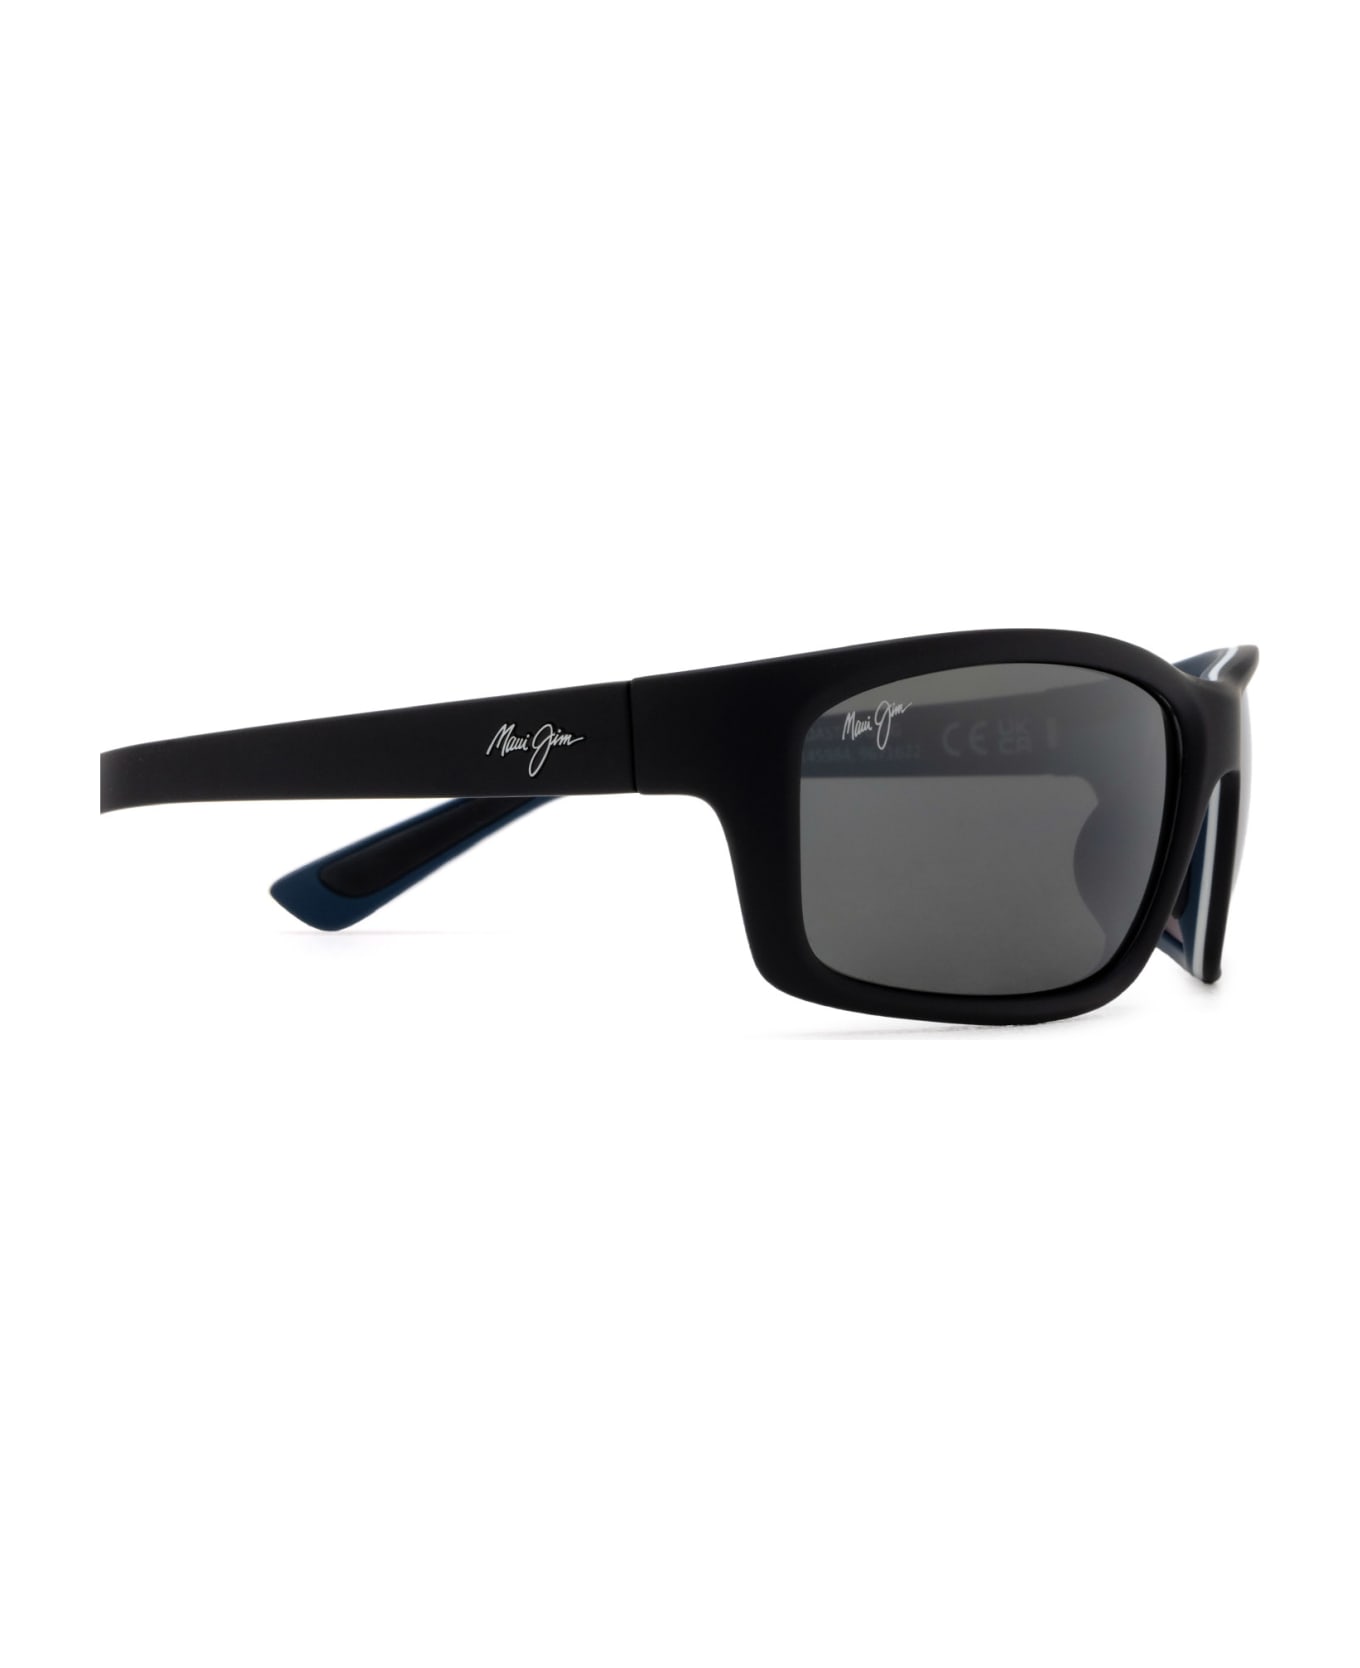 Maui Jim Mj766 Matte Soft Black / White / Blue Sunglasses - Matte Soft Black / White / Blue